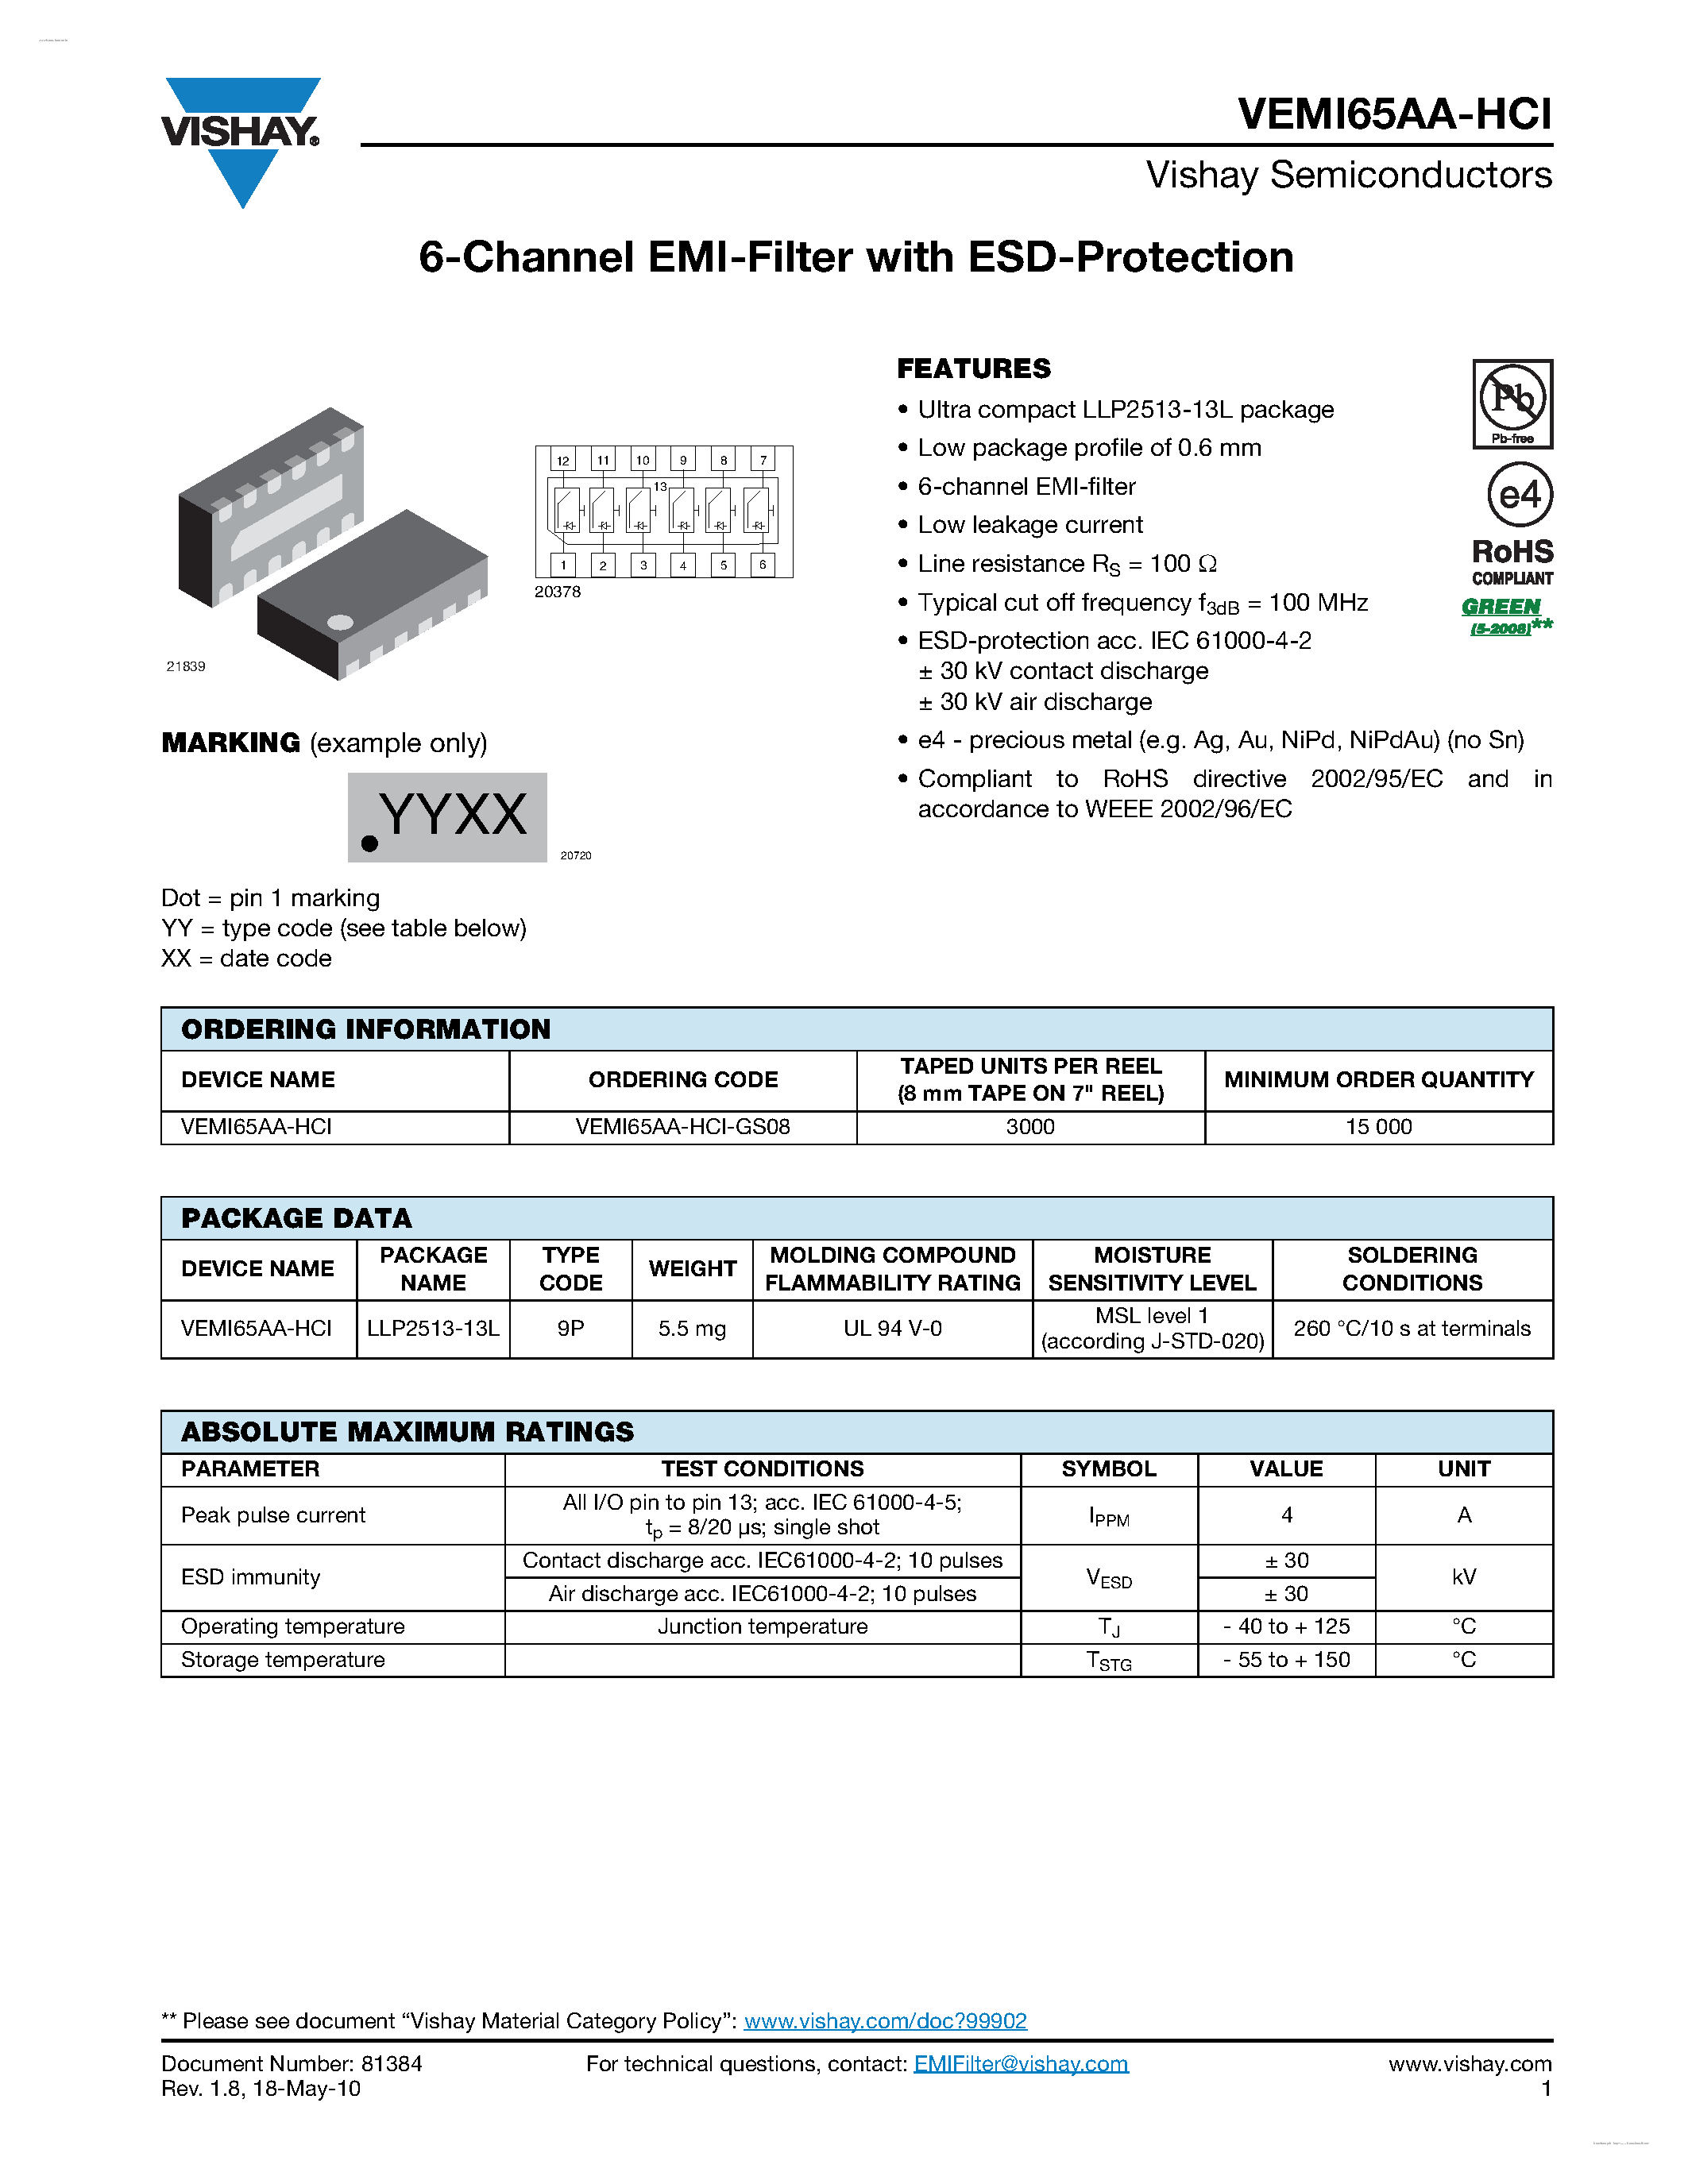 Datasheet VEMI65AA-HCI - 6-Channel EMI-Filter page 1